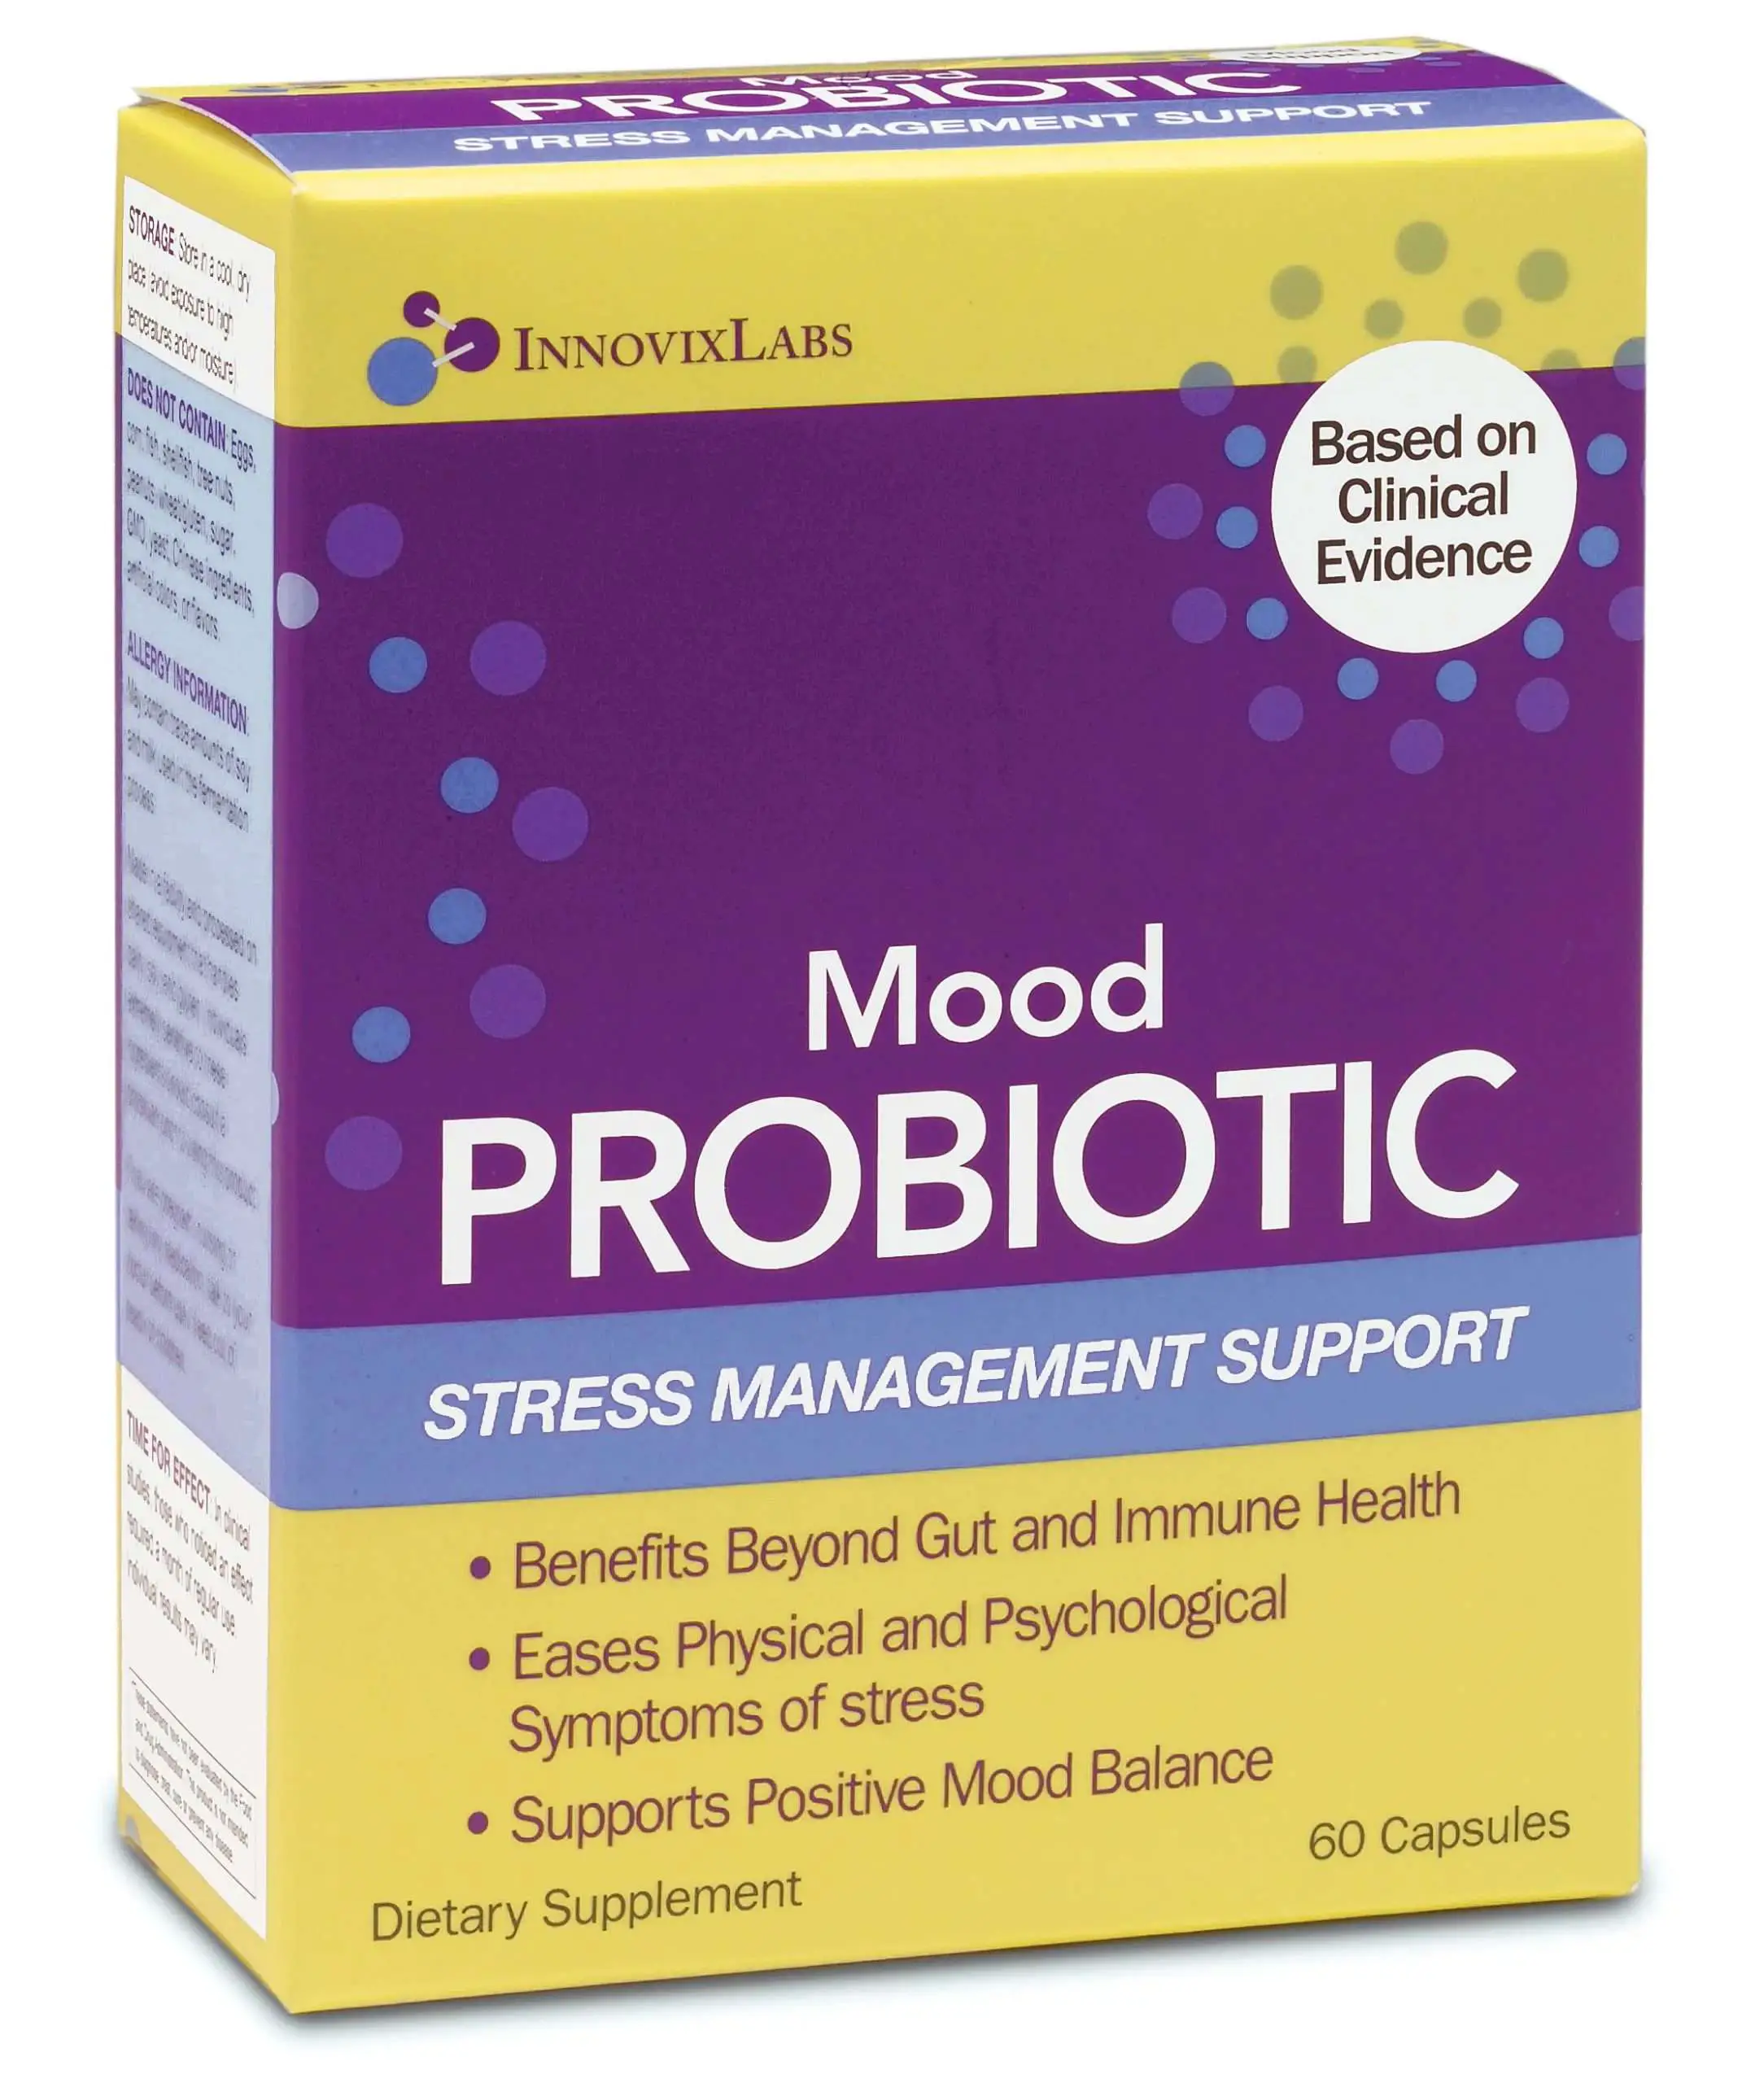 Innovixlabs Mood Probiotic Capsules, 60 Ct